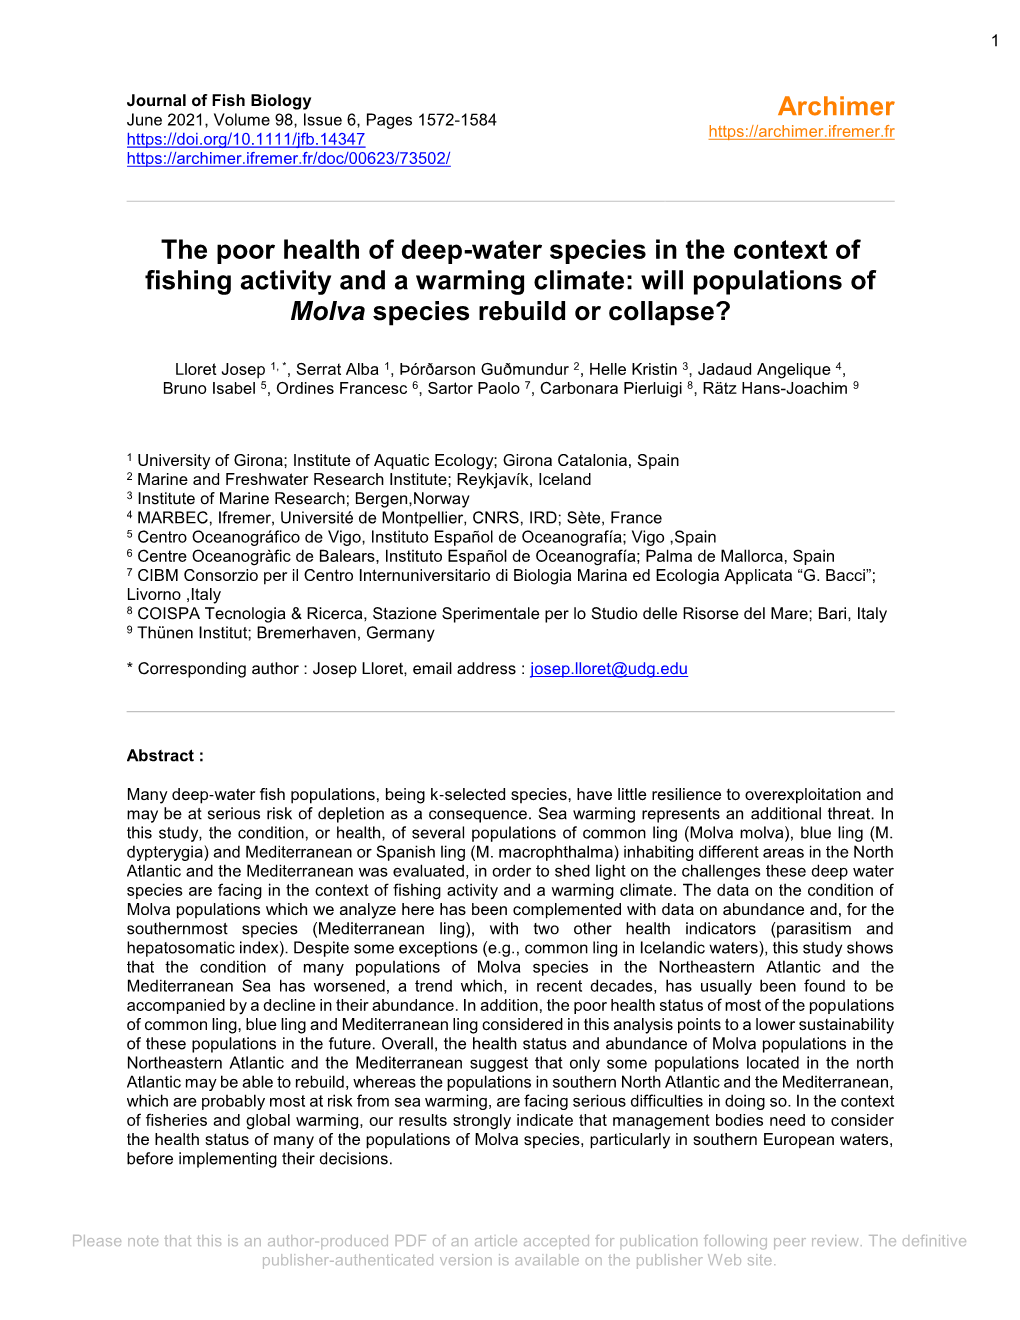 The Poor Health of Deep‐Water Species in the Context Of